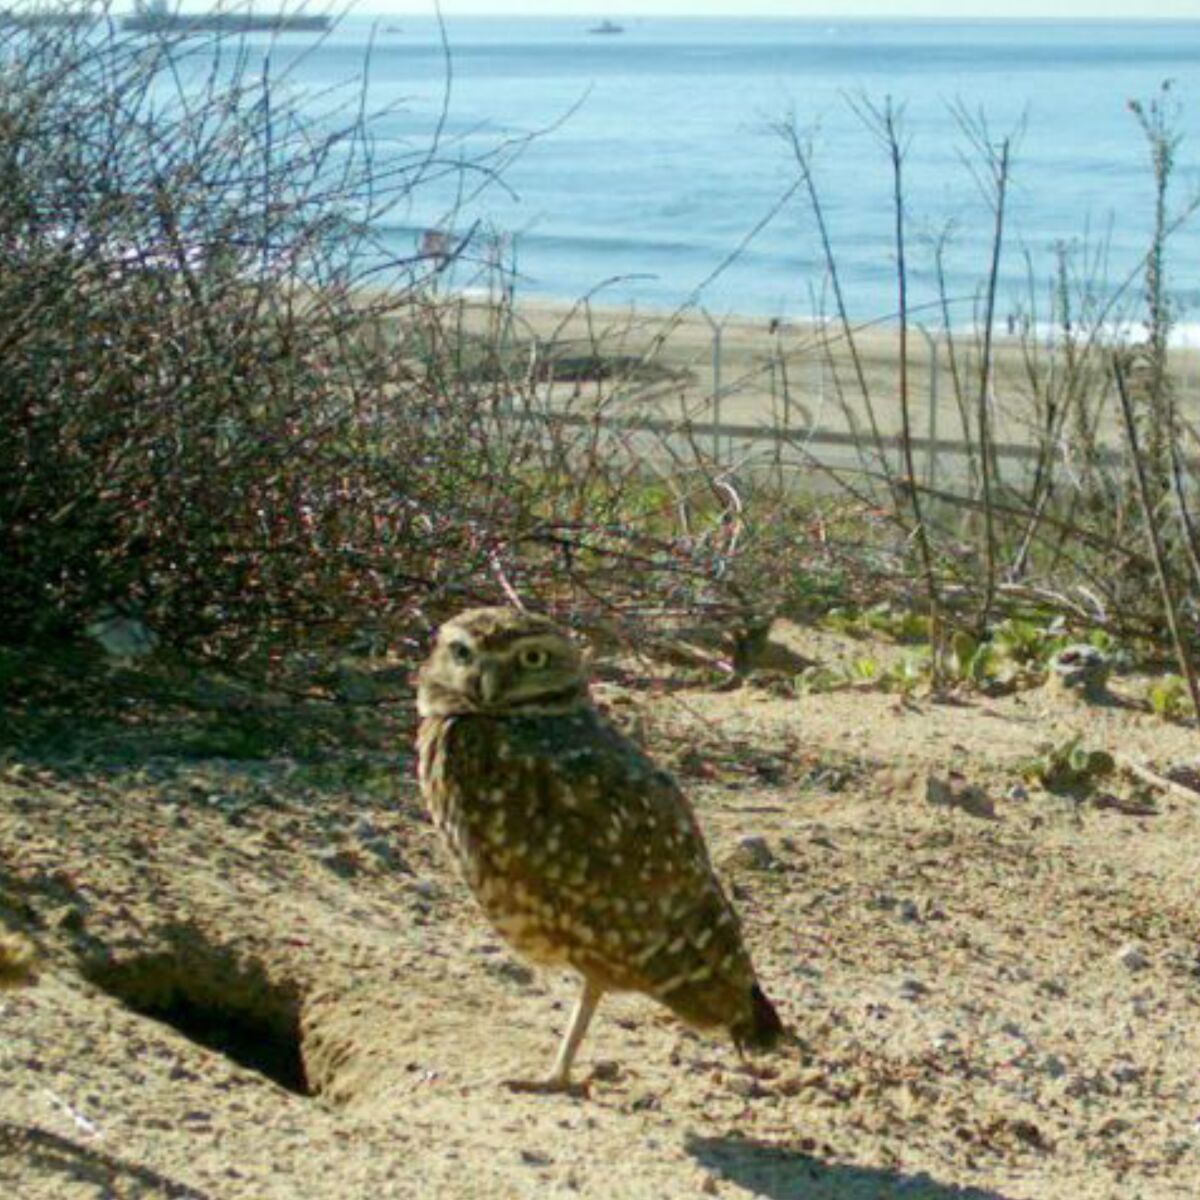 An owl stands on the sand near the ocean